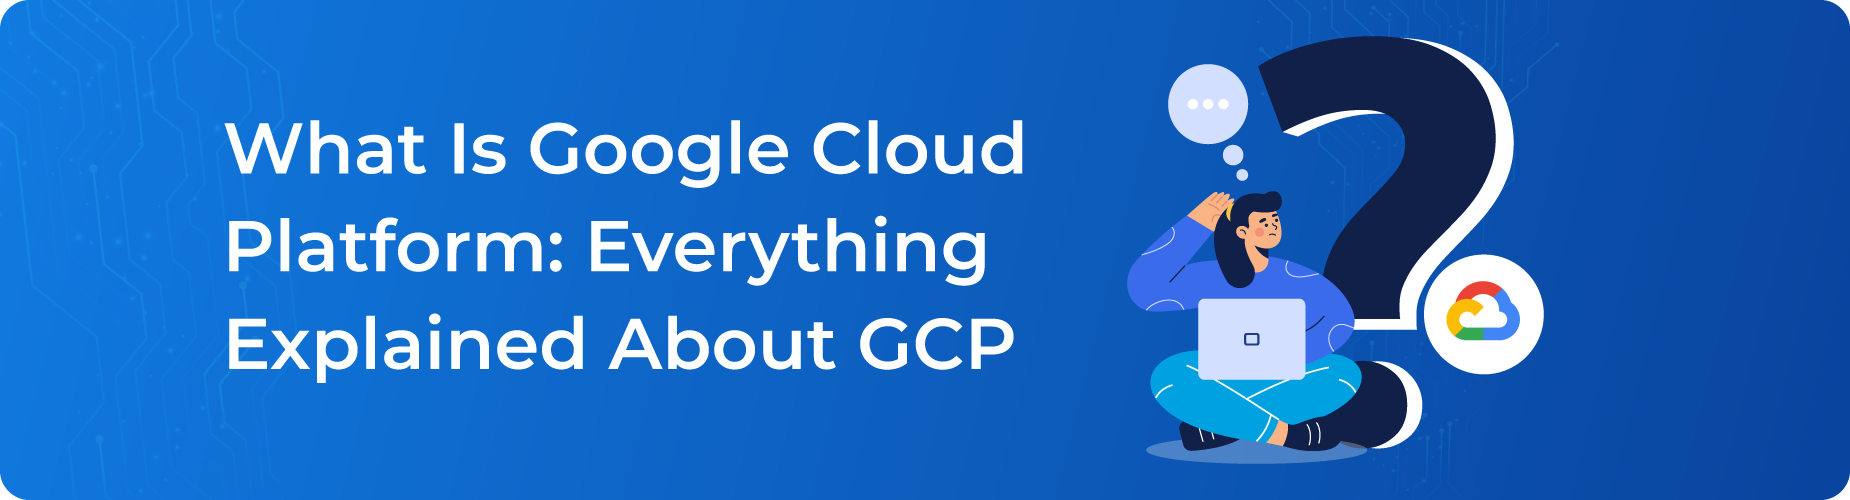 what is google cloud platform guide